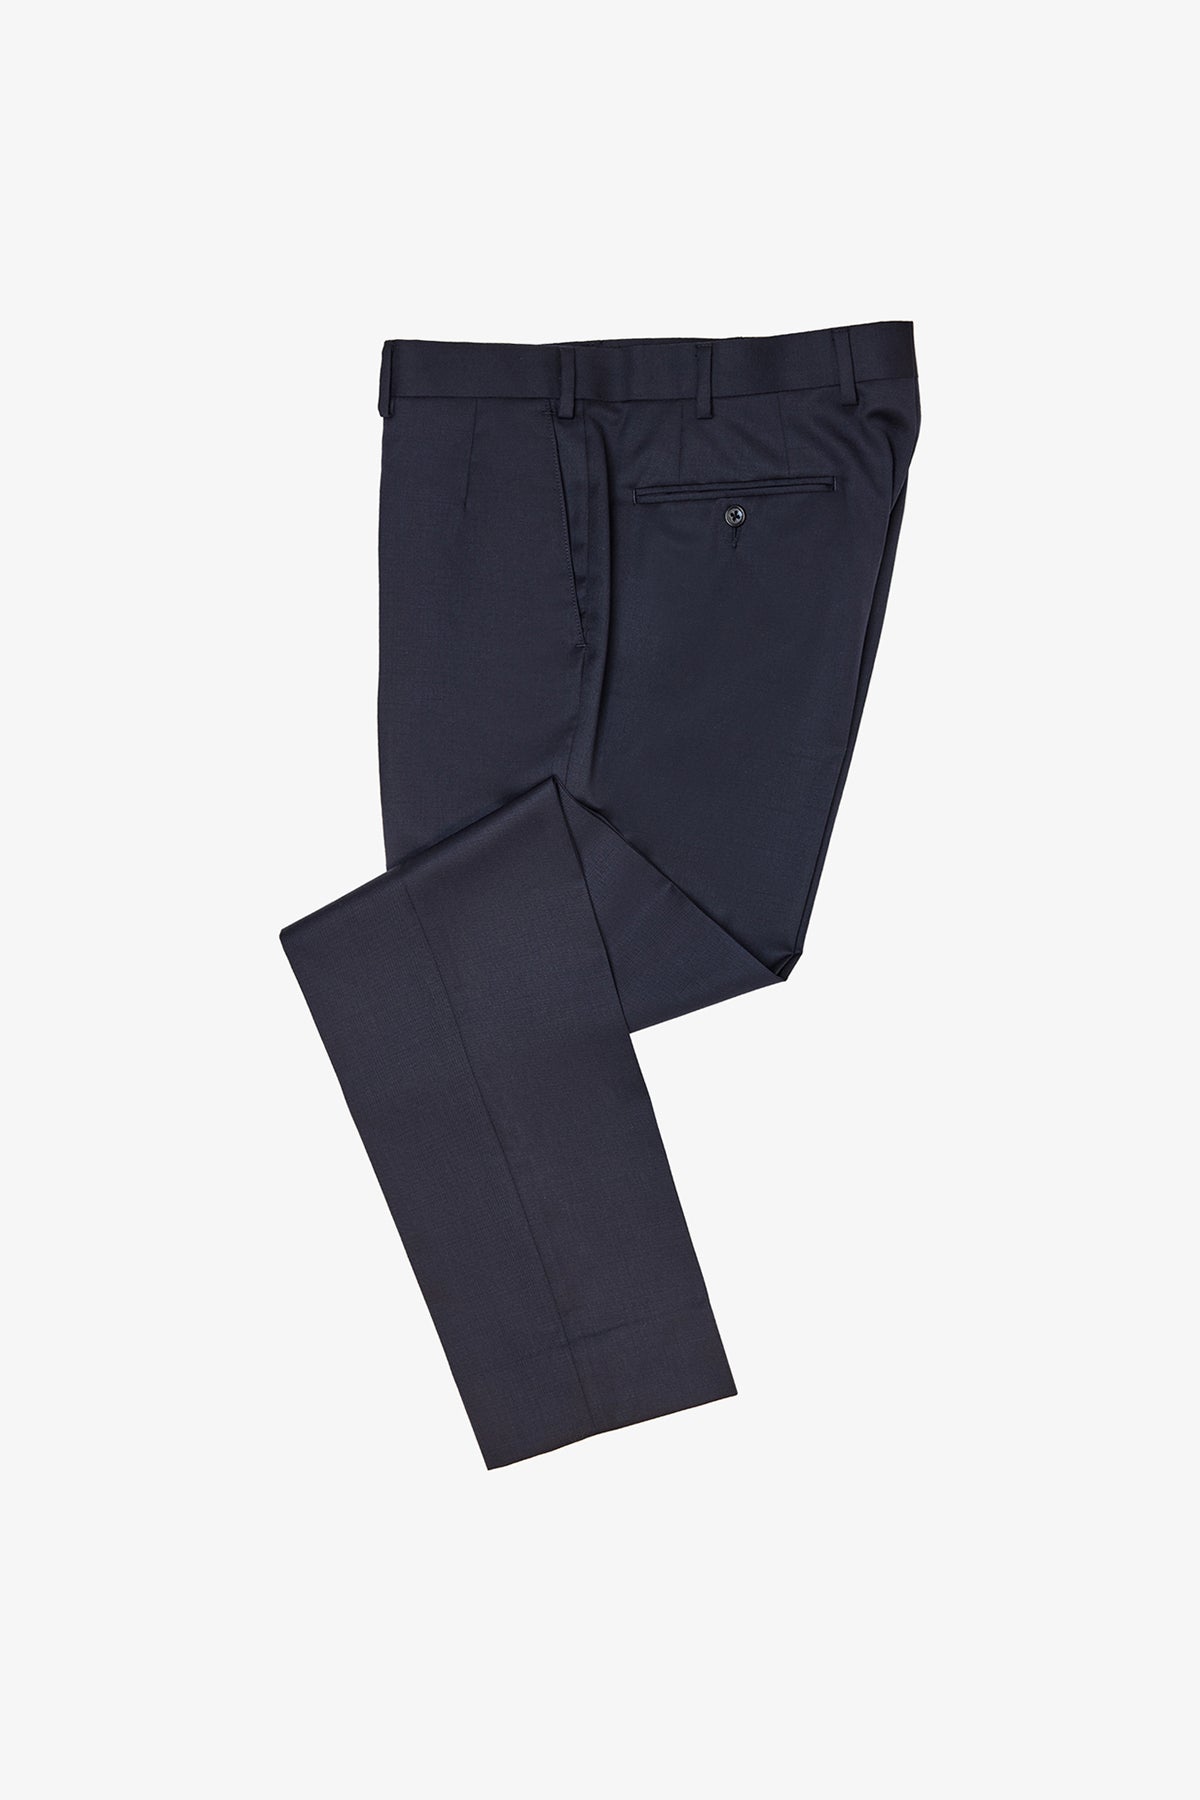 Montclair - Navy Trouser